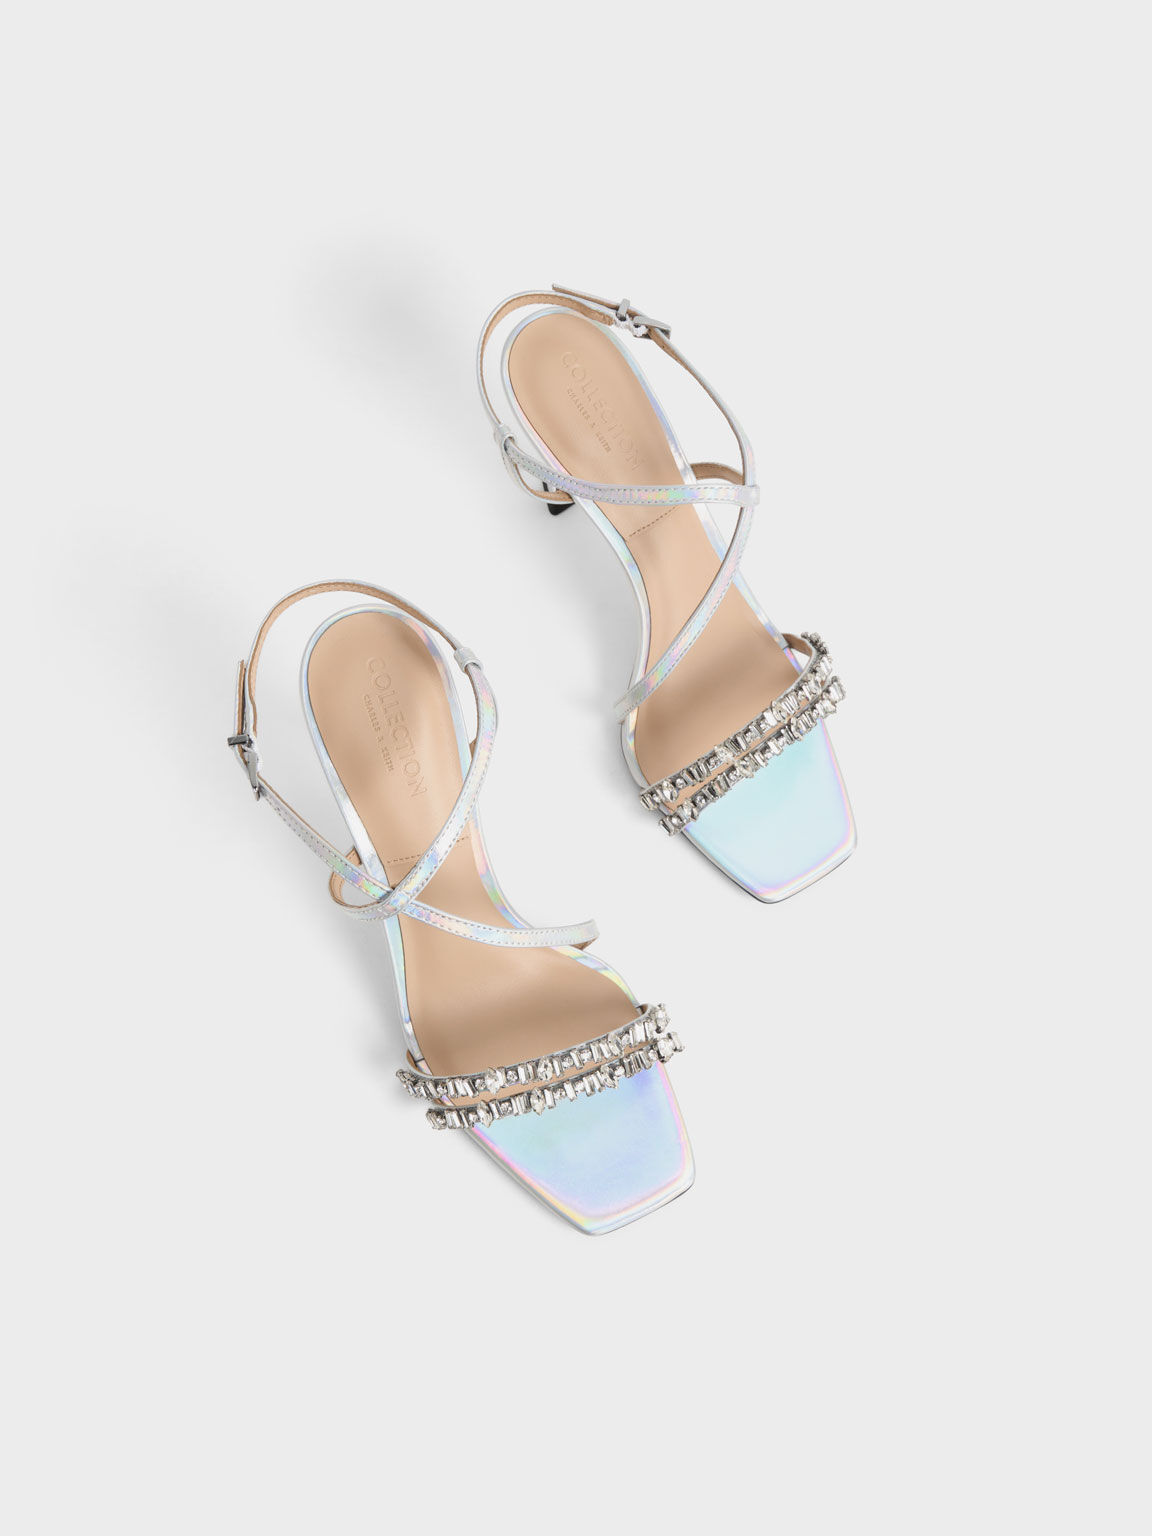 Giày sandals cao gót đính đá Holographic Leather Gem-Embellished, Nhiều màu, hi-res